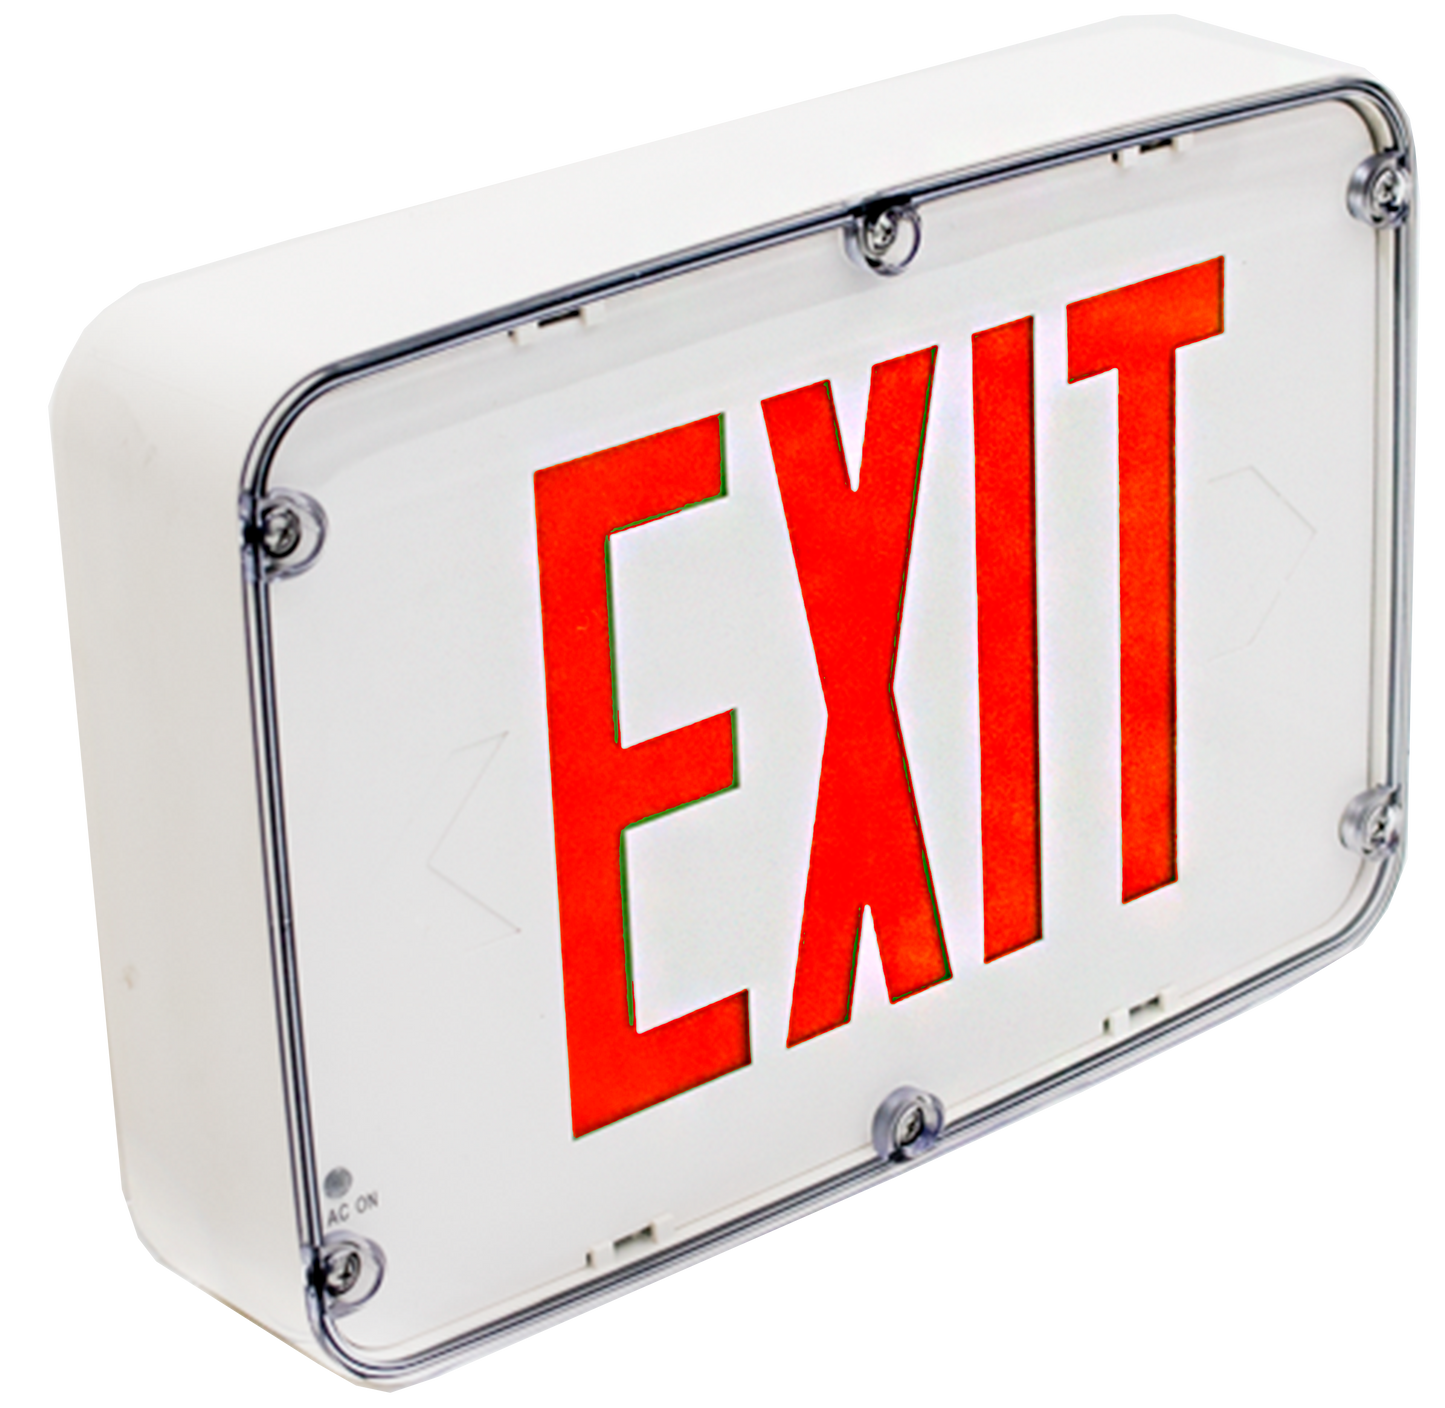 Westgate Lighting  Nema 4X Rated Led Exit Sign, Single Face, Red White Em Incl.  XTN4X-1RWEM